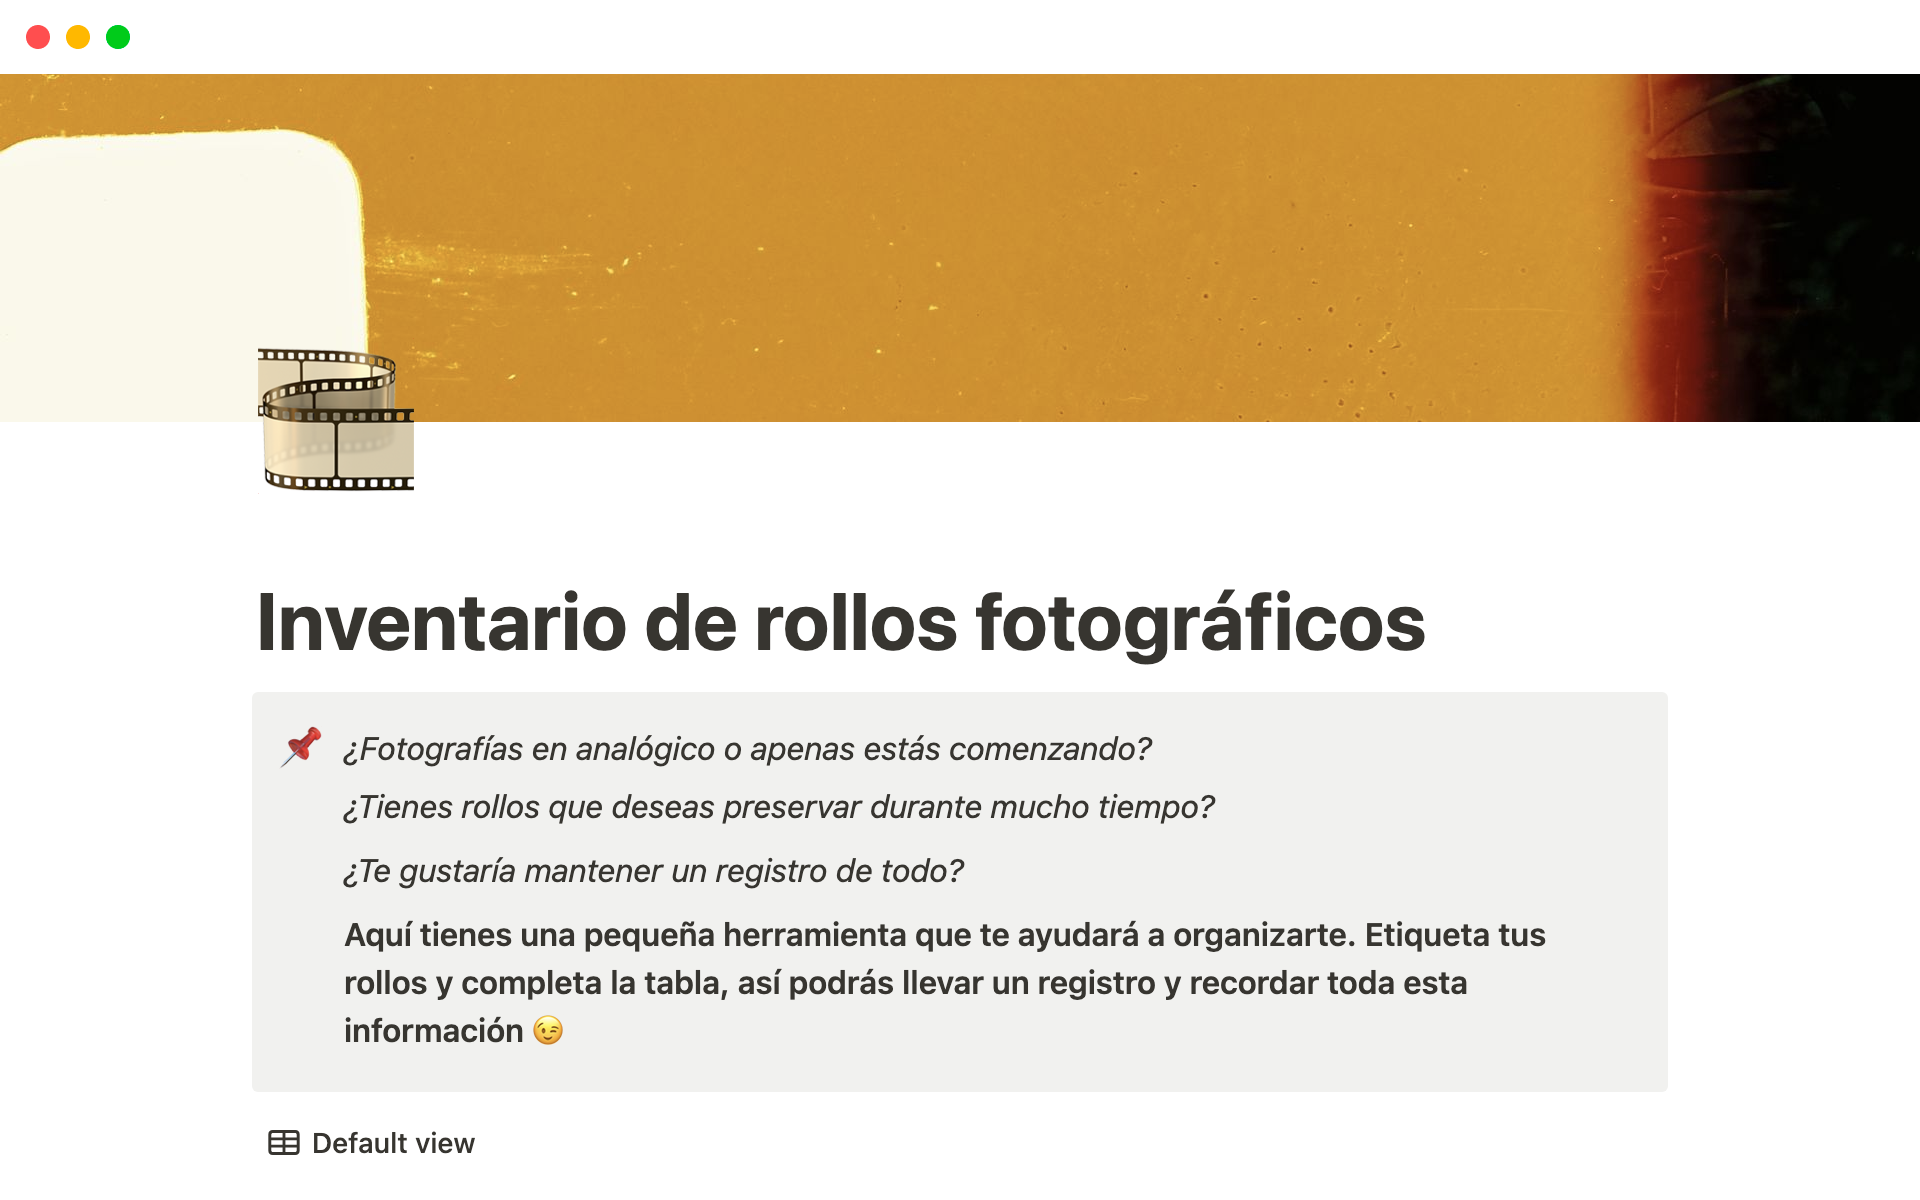 A template preview for Inventario de rollos fotográficos